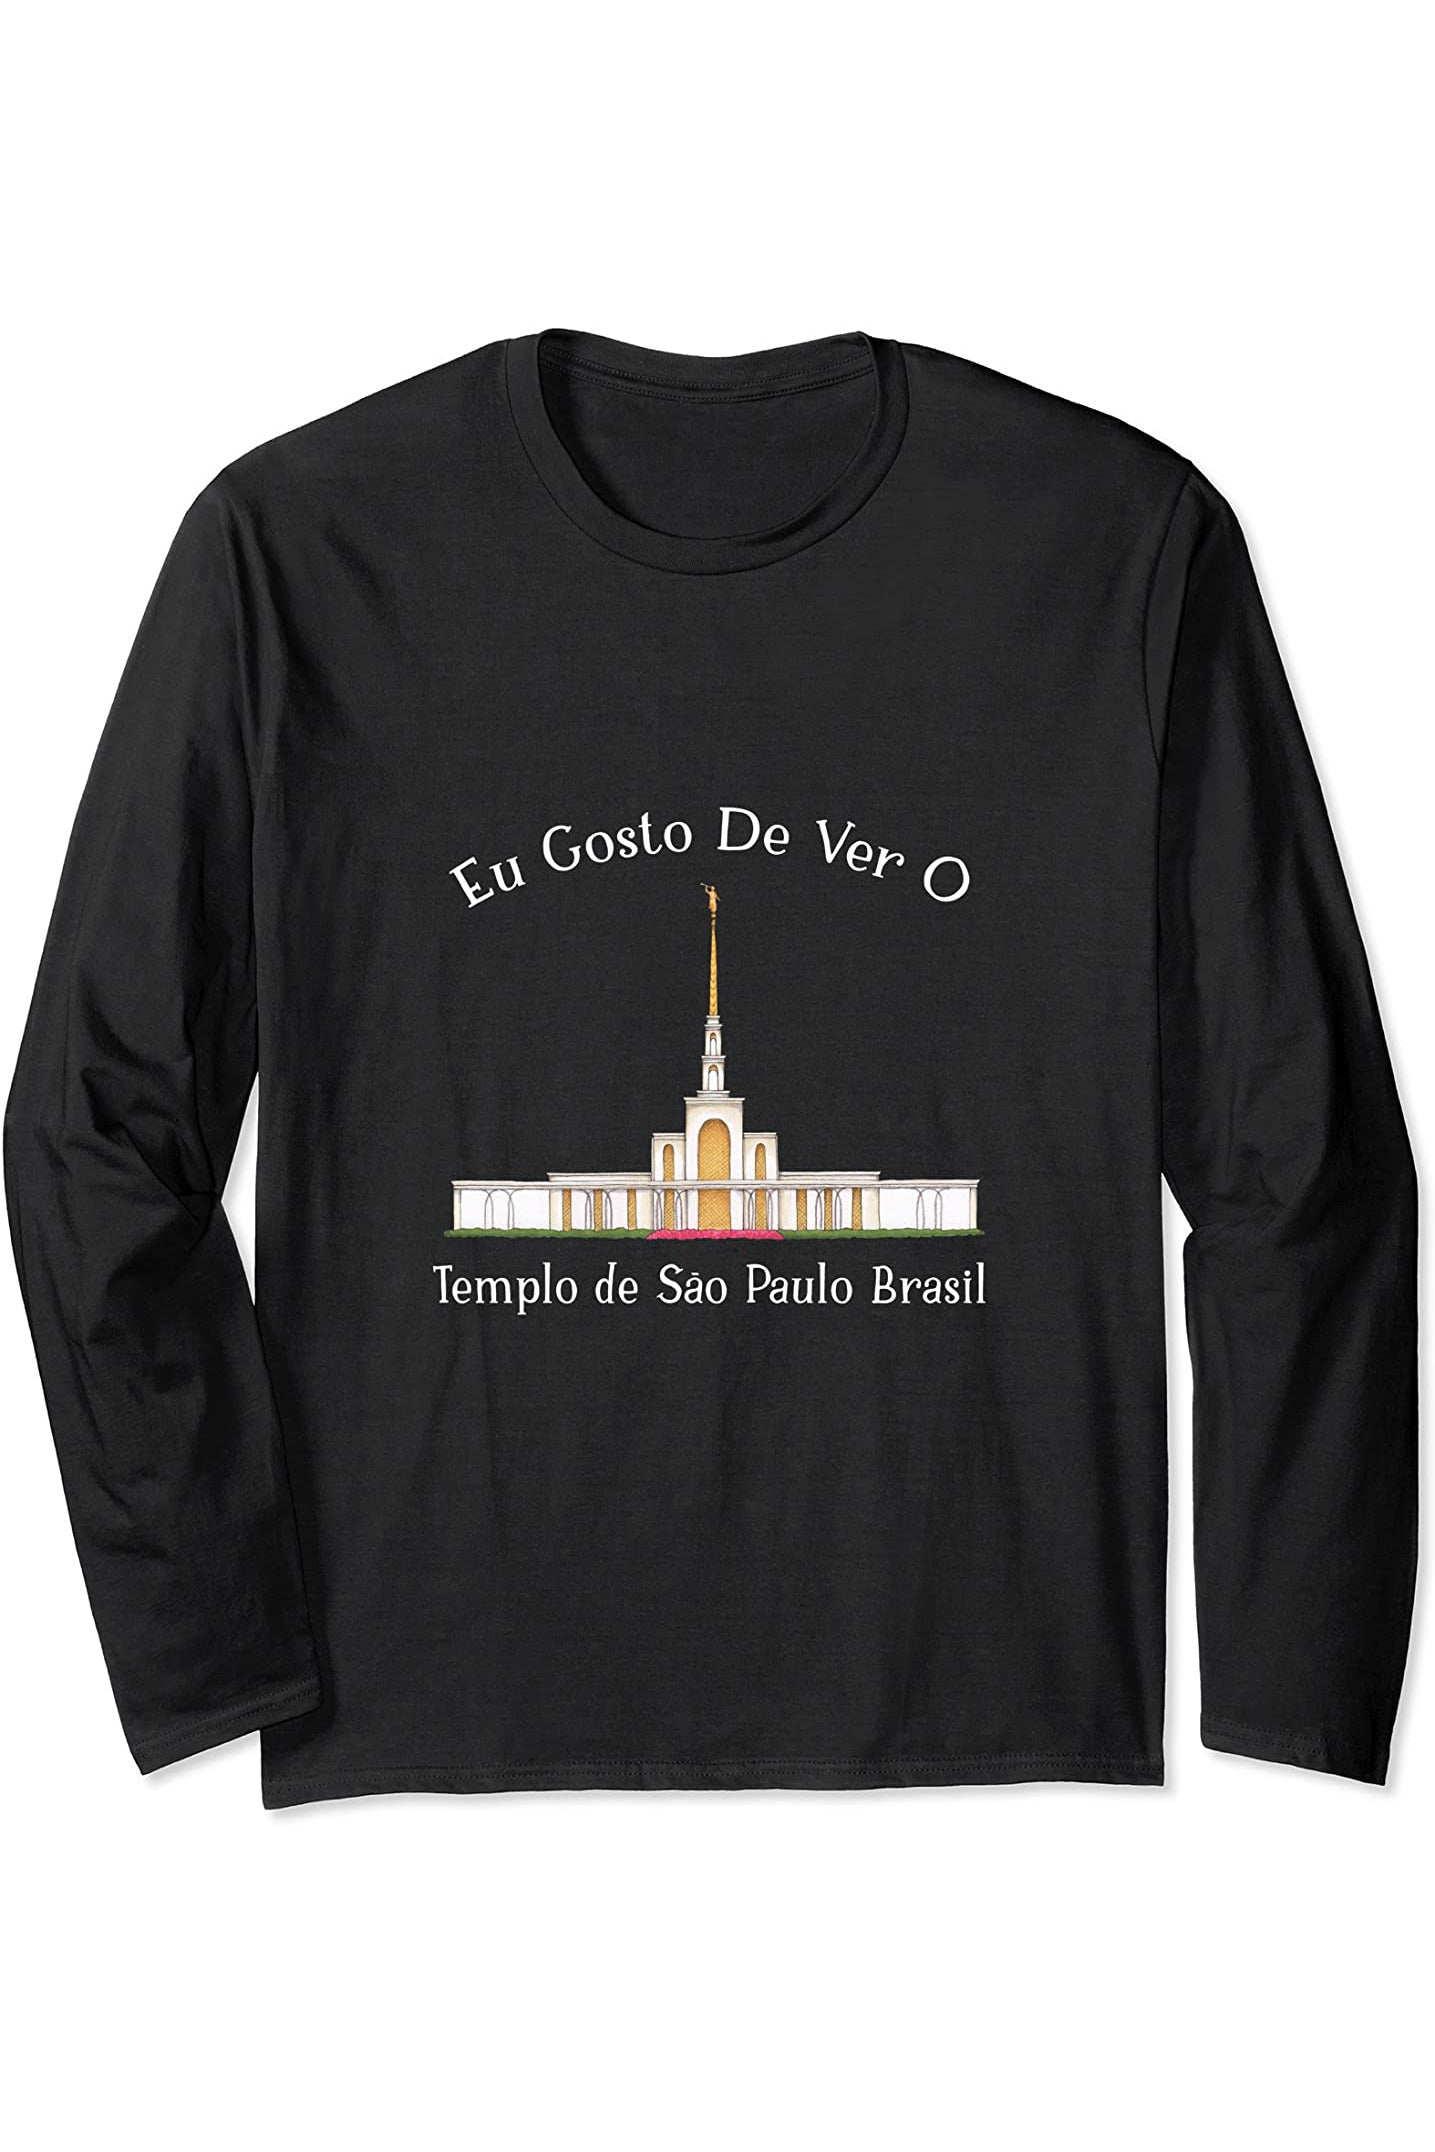 Templo de Manaus Brasil Long Sleeve T-Shirt - Happy Style (Portuguese) US